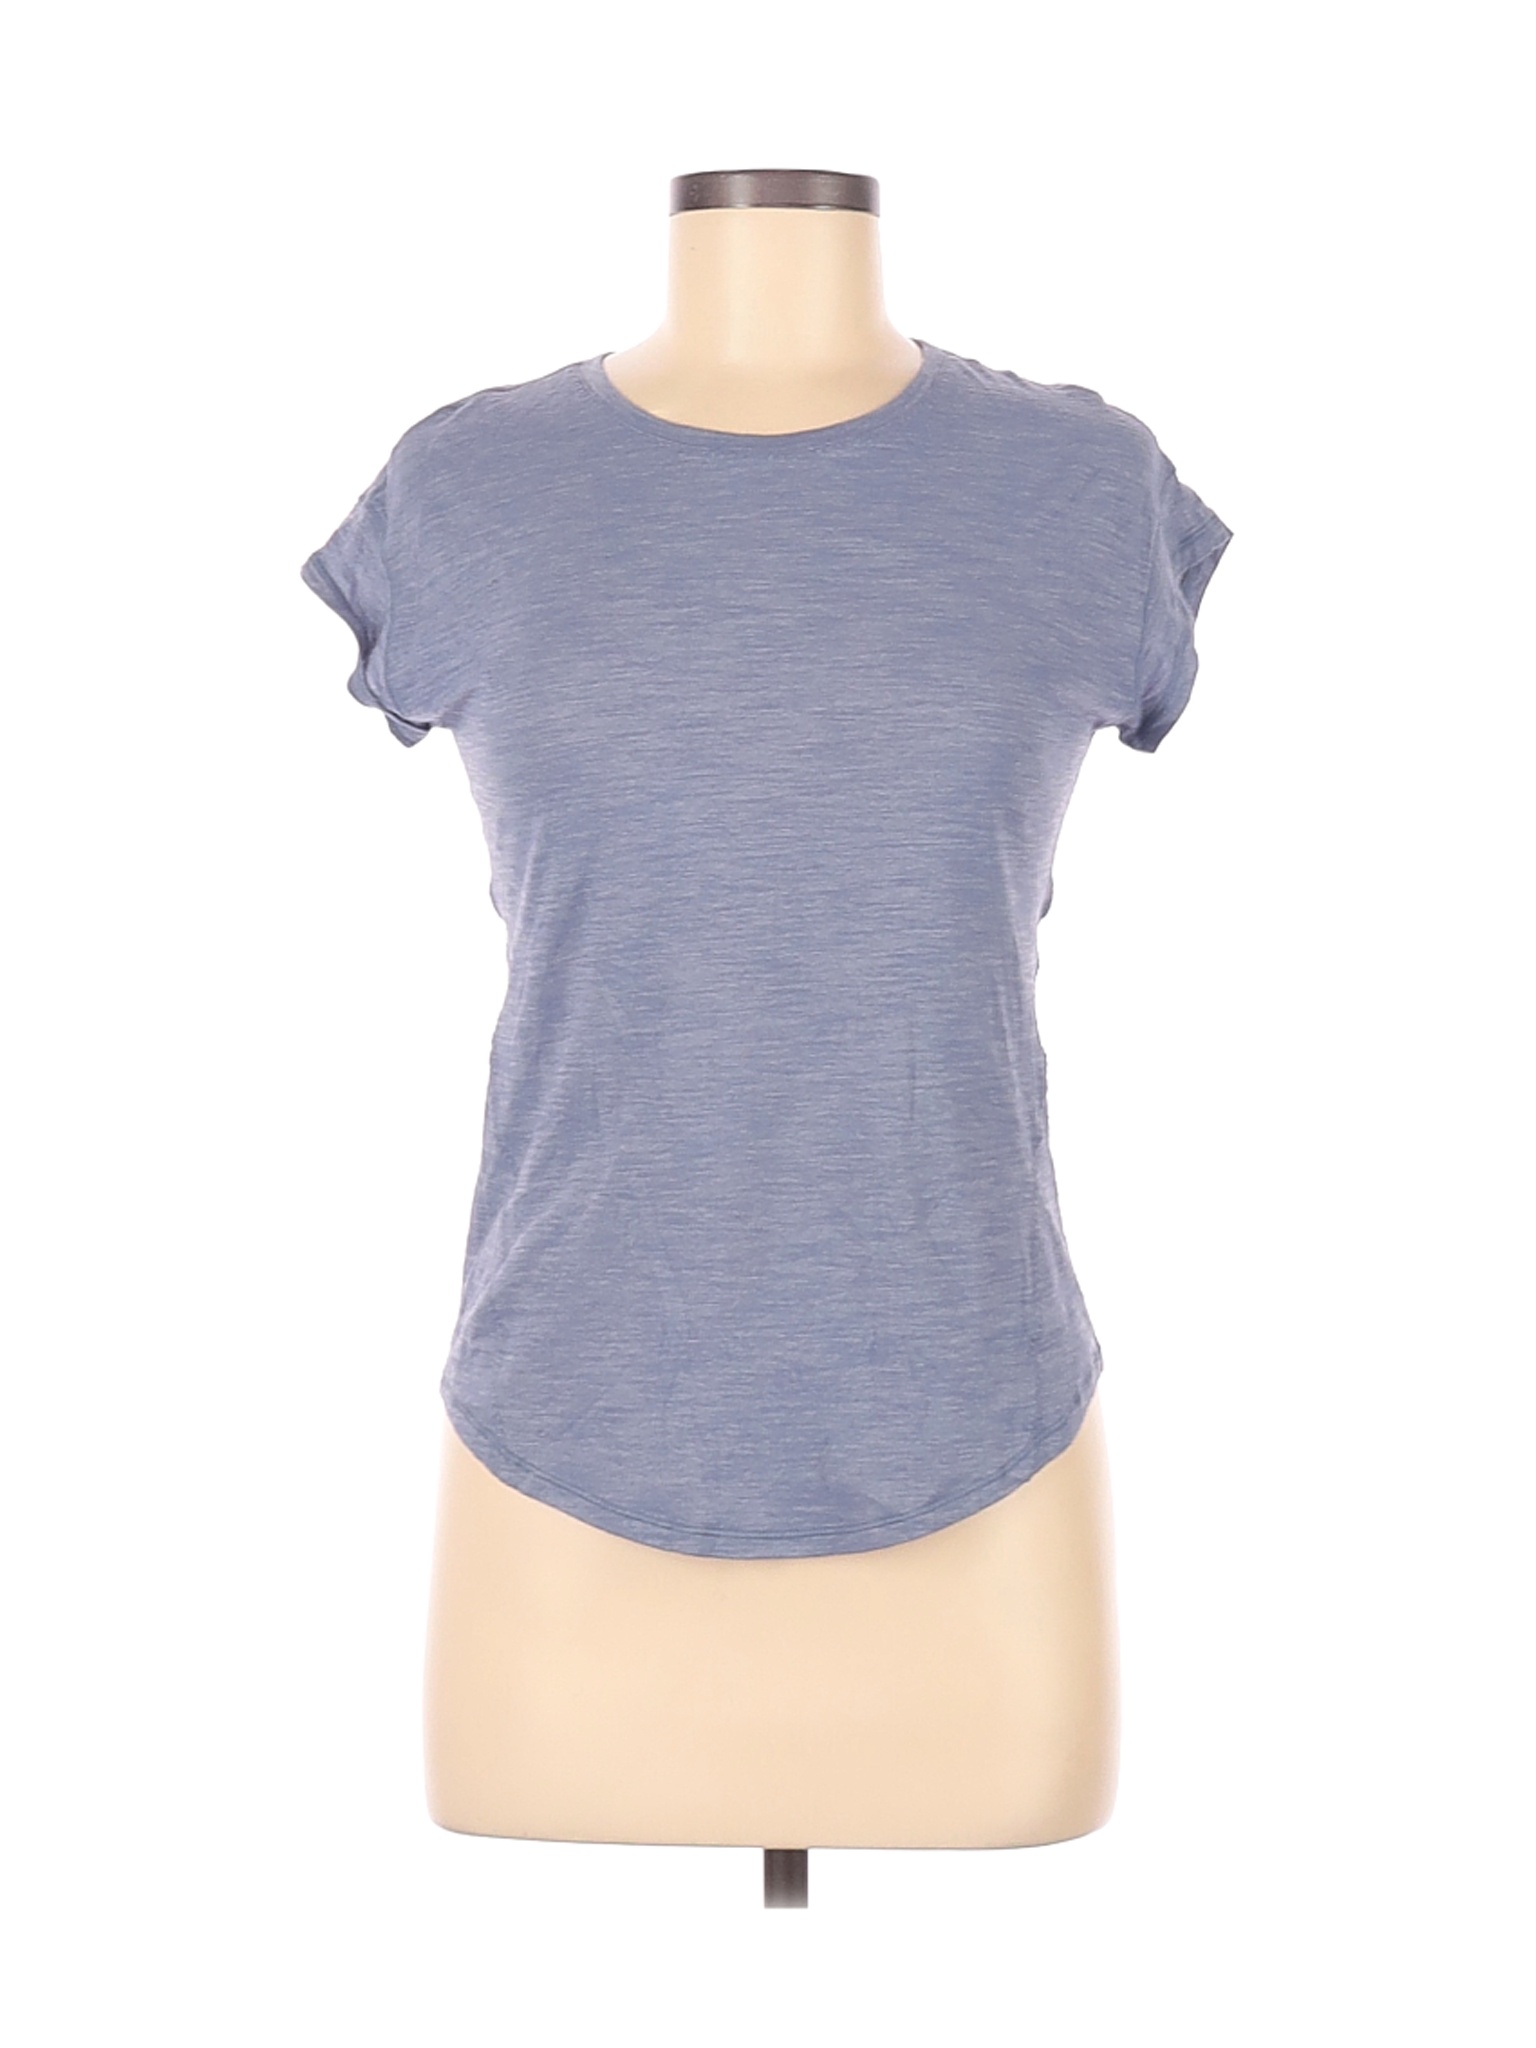 Lululemon Athletica Women Blue Active T-Shirt 6 | eBay